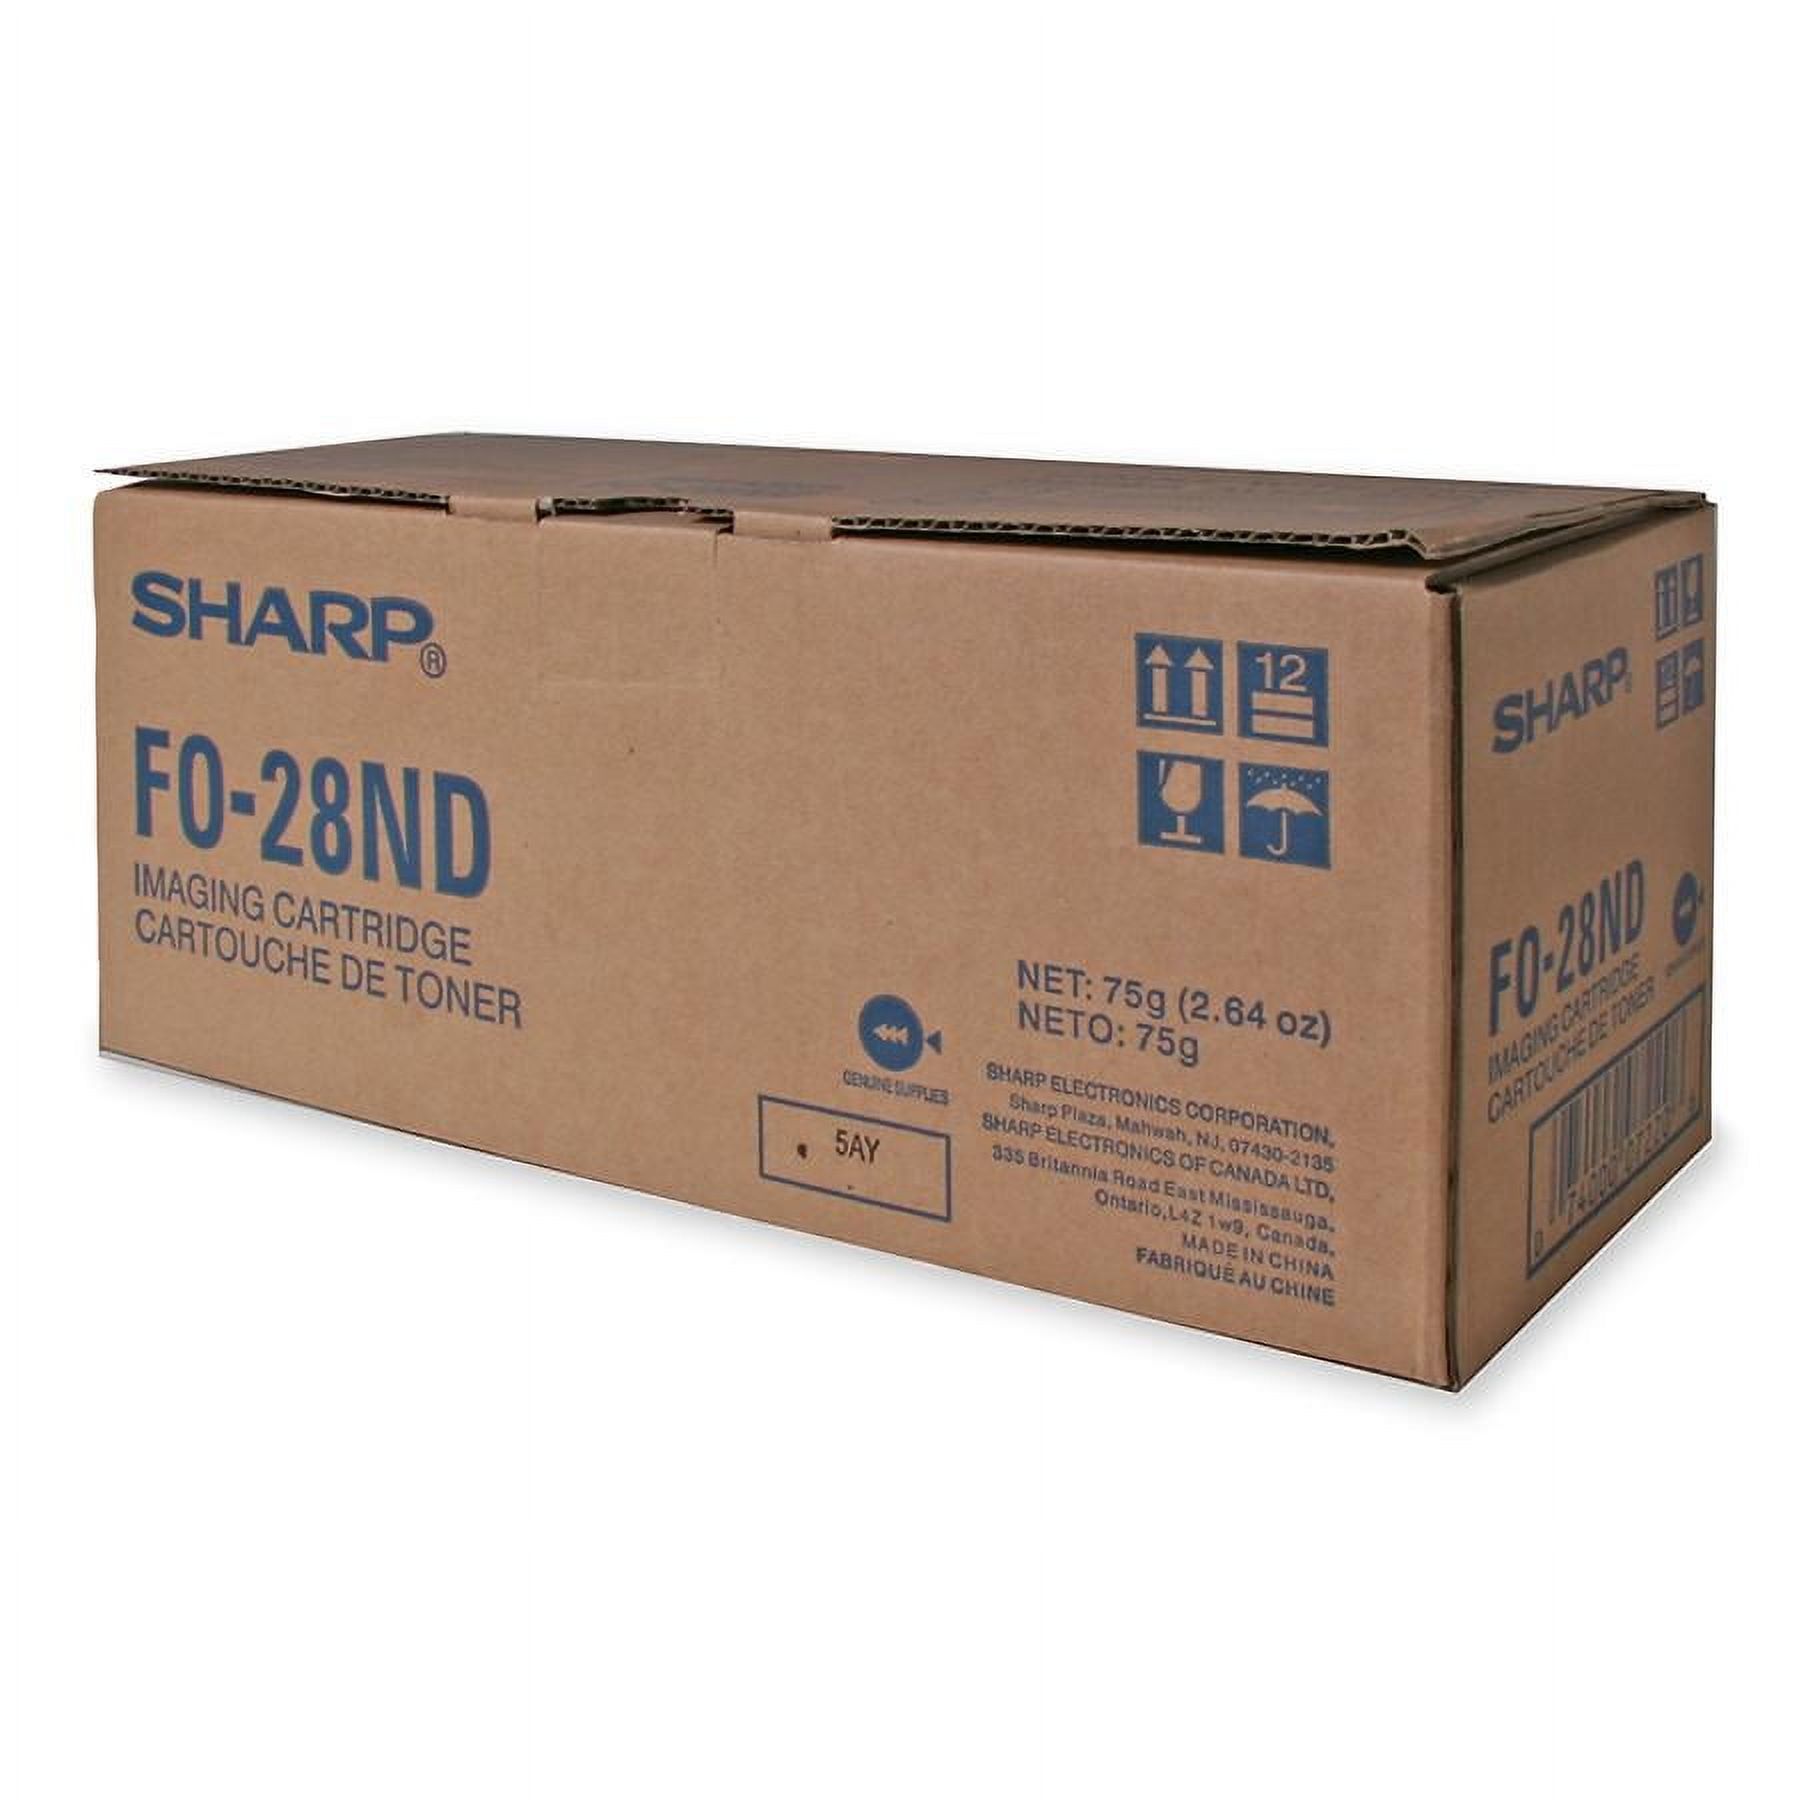 SHARP FO-2850 Toner Cartridge (3,000 yield) - image 2 of 2